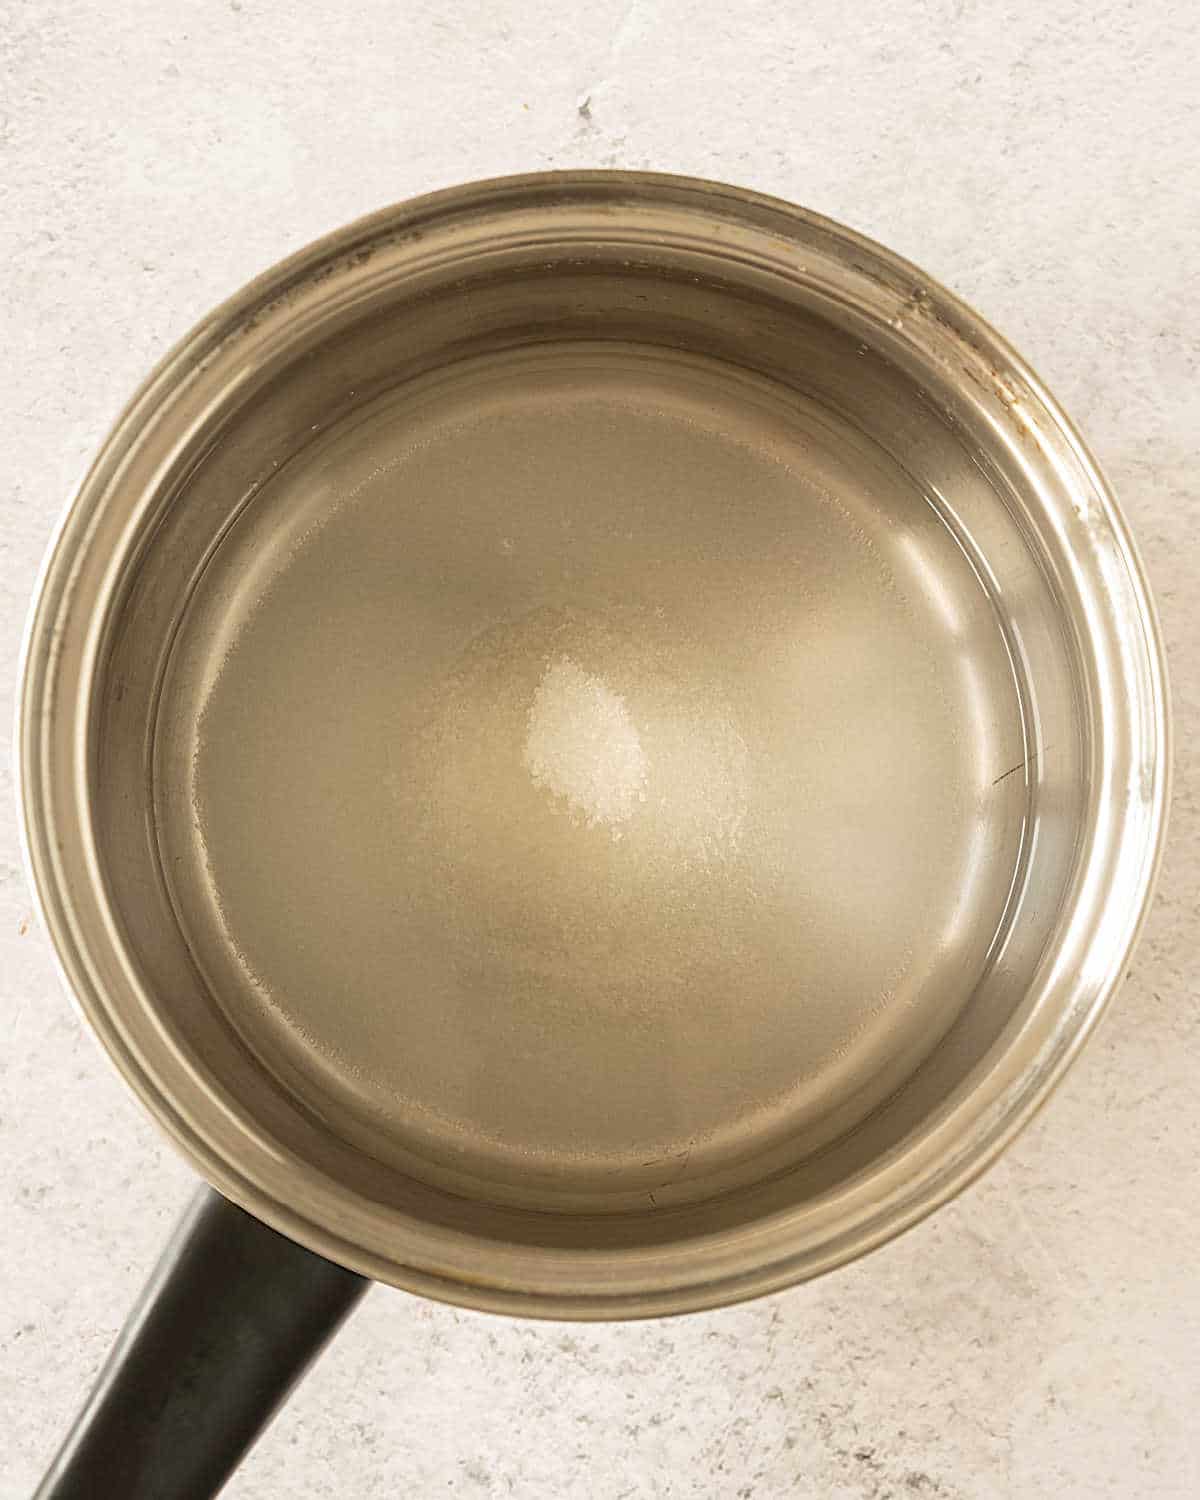 Metal saucepan with sugar and water. Light grey surface.